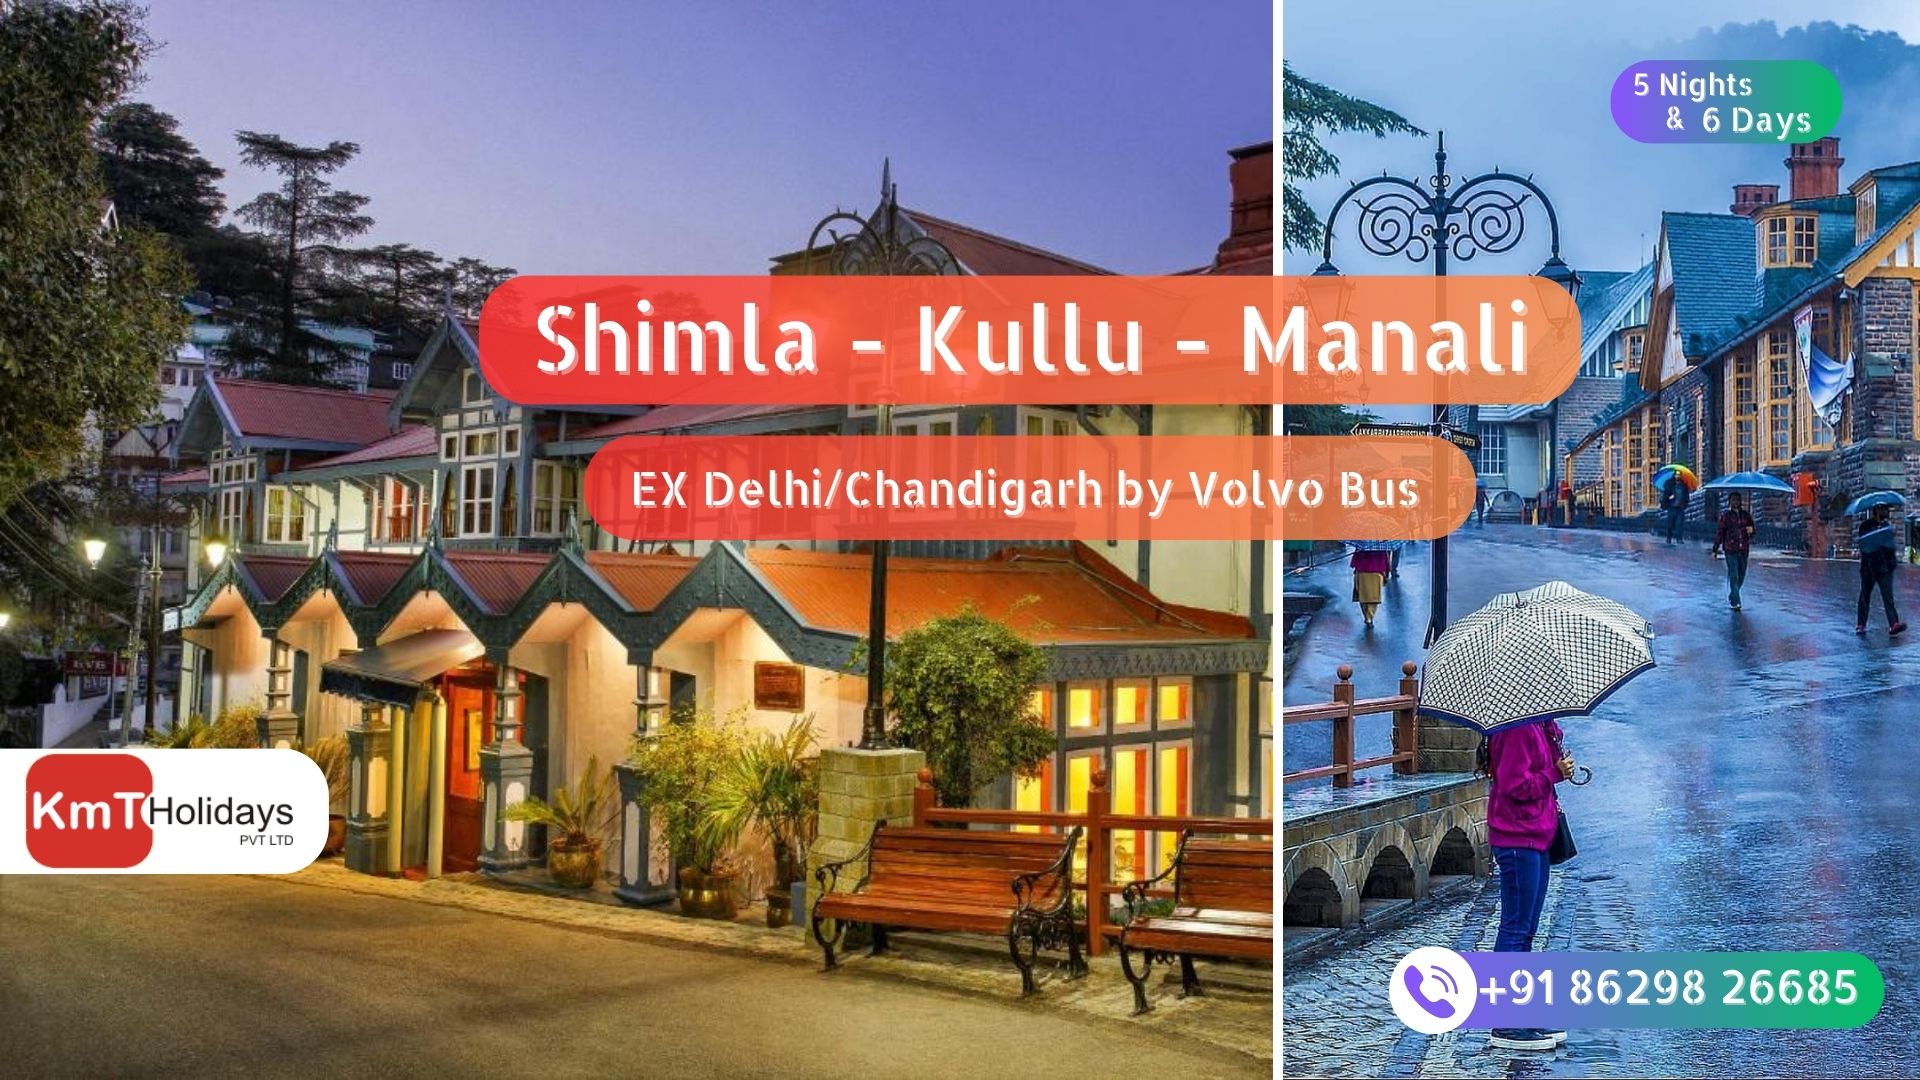 Shimla Manali Trip by Car